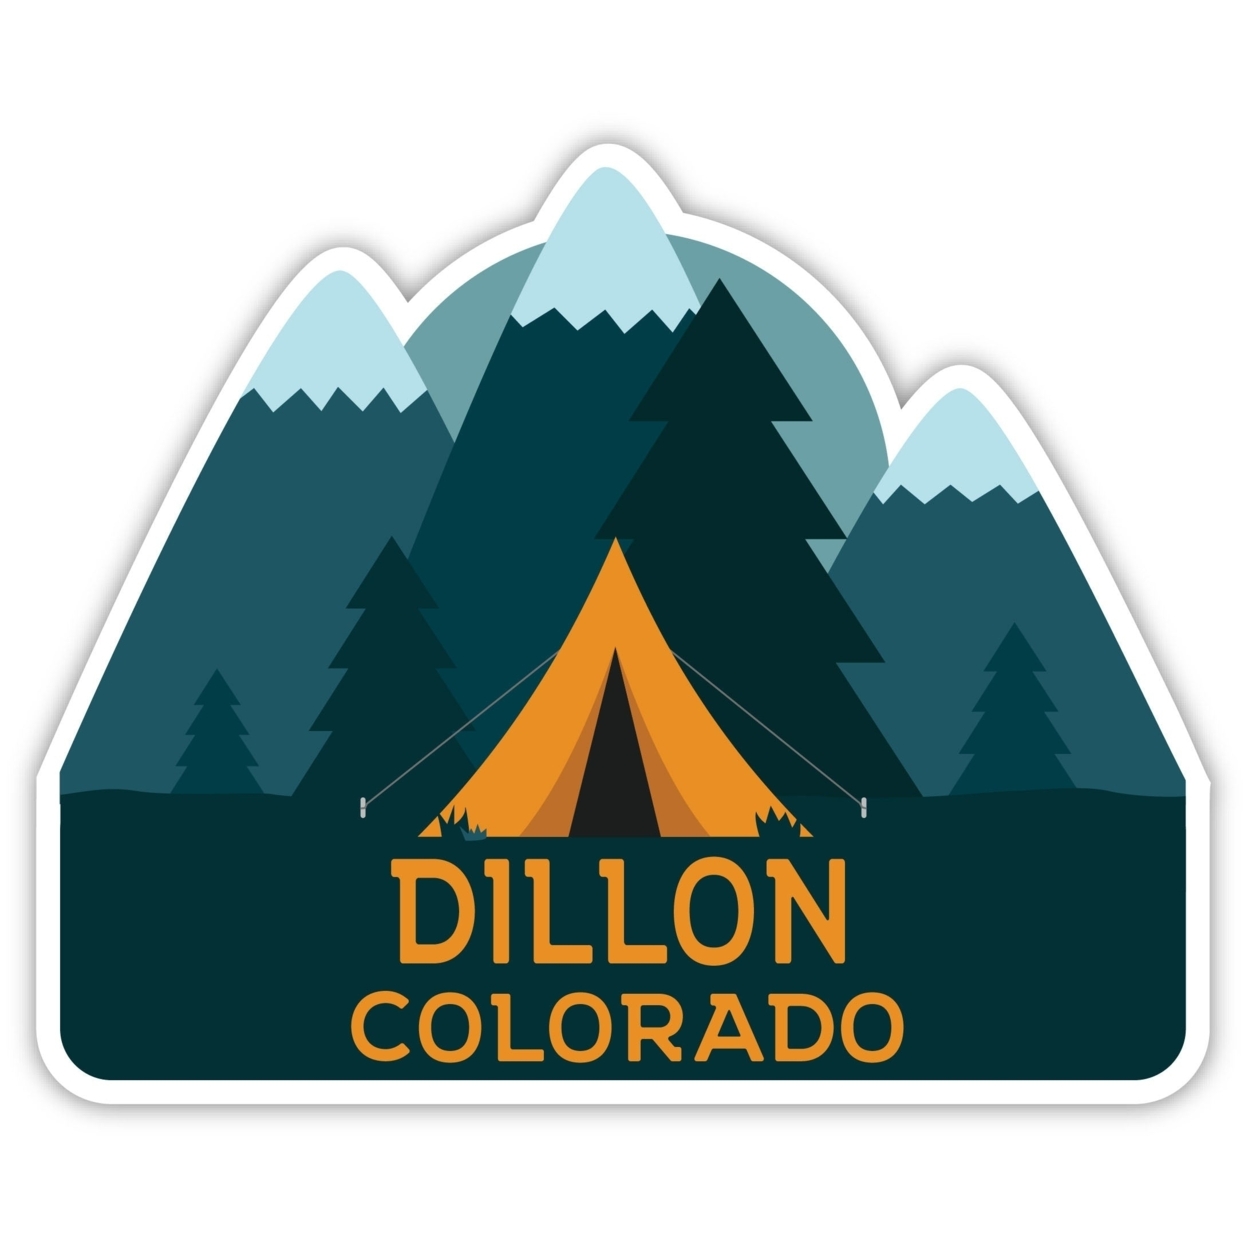 Dillon Colorado Souvenir Decorative Stickers (Choose Theme And Size) - Single Unit, 10-Inch, Adventures Awaits